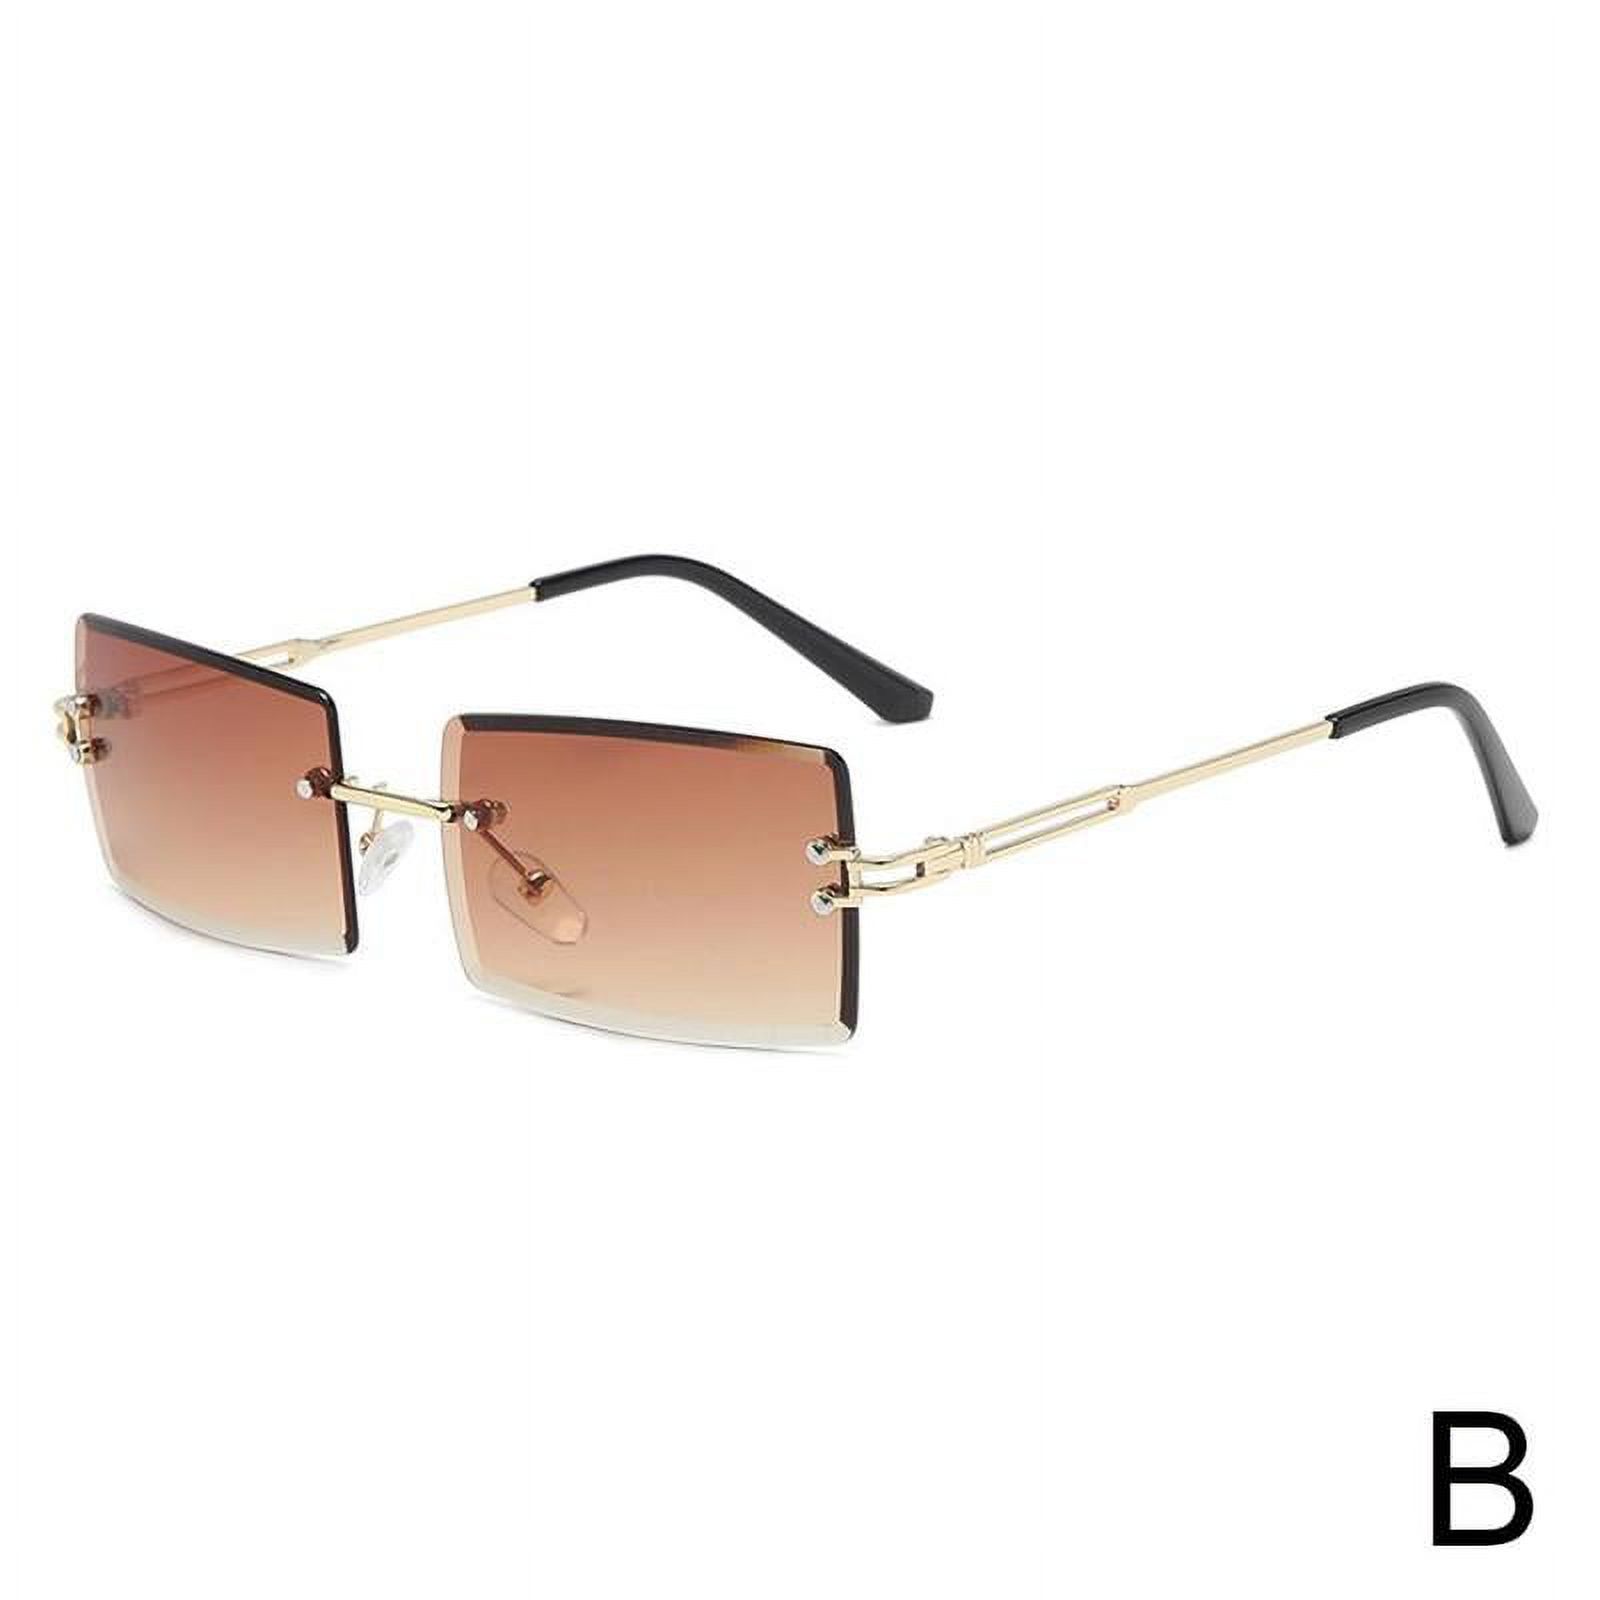 ctangle sunglasses sunglasses,rimless sunglasses,frame square sunglasses,tinted sunglasses,womens sunglasses,pink sunglasses T4Q2 - image 1 of 1